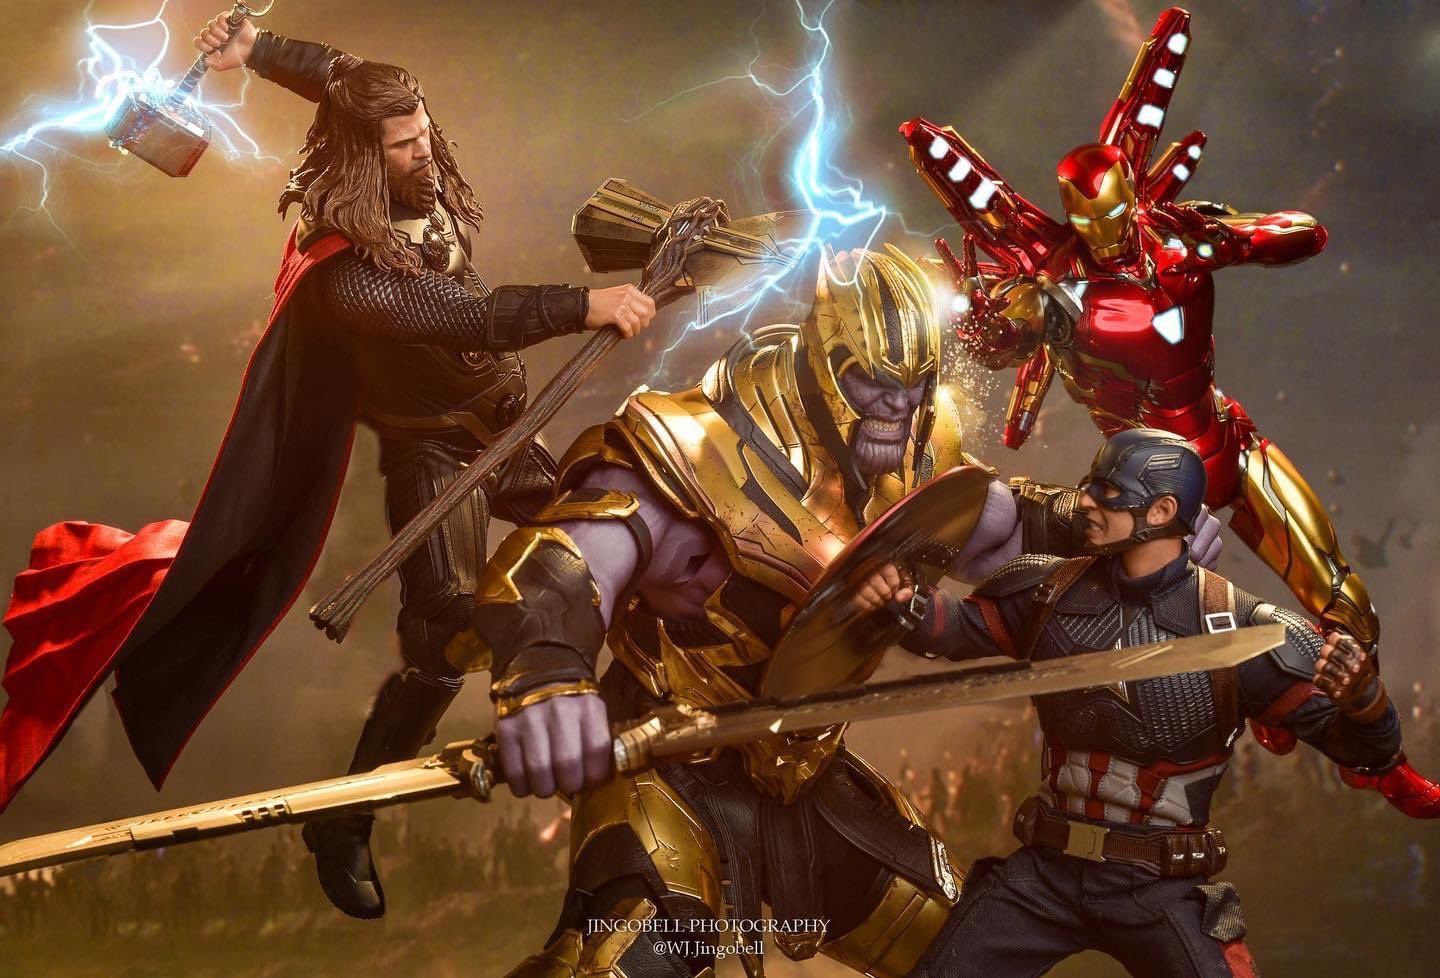 Pedido Figura Thor - Avengers: Endgame marca Hot Toys MMS557 escala 1/6